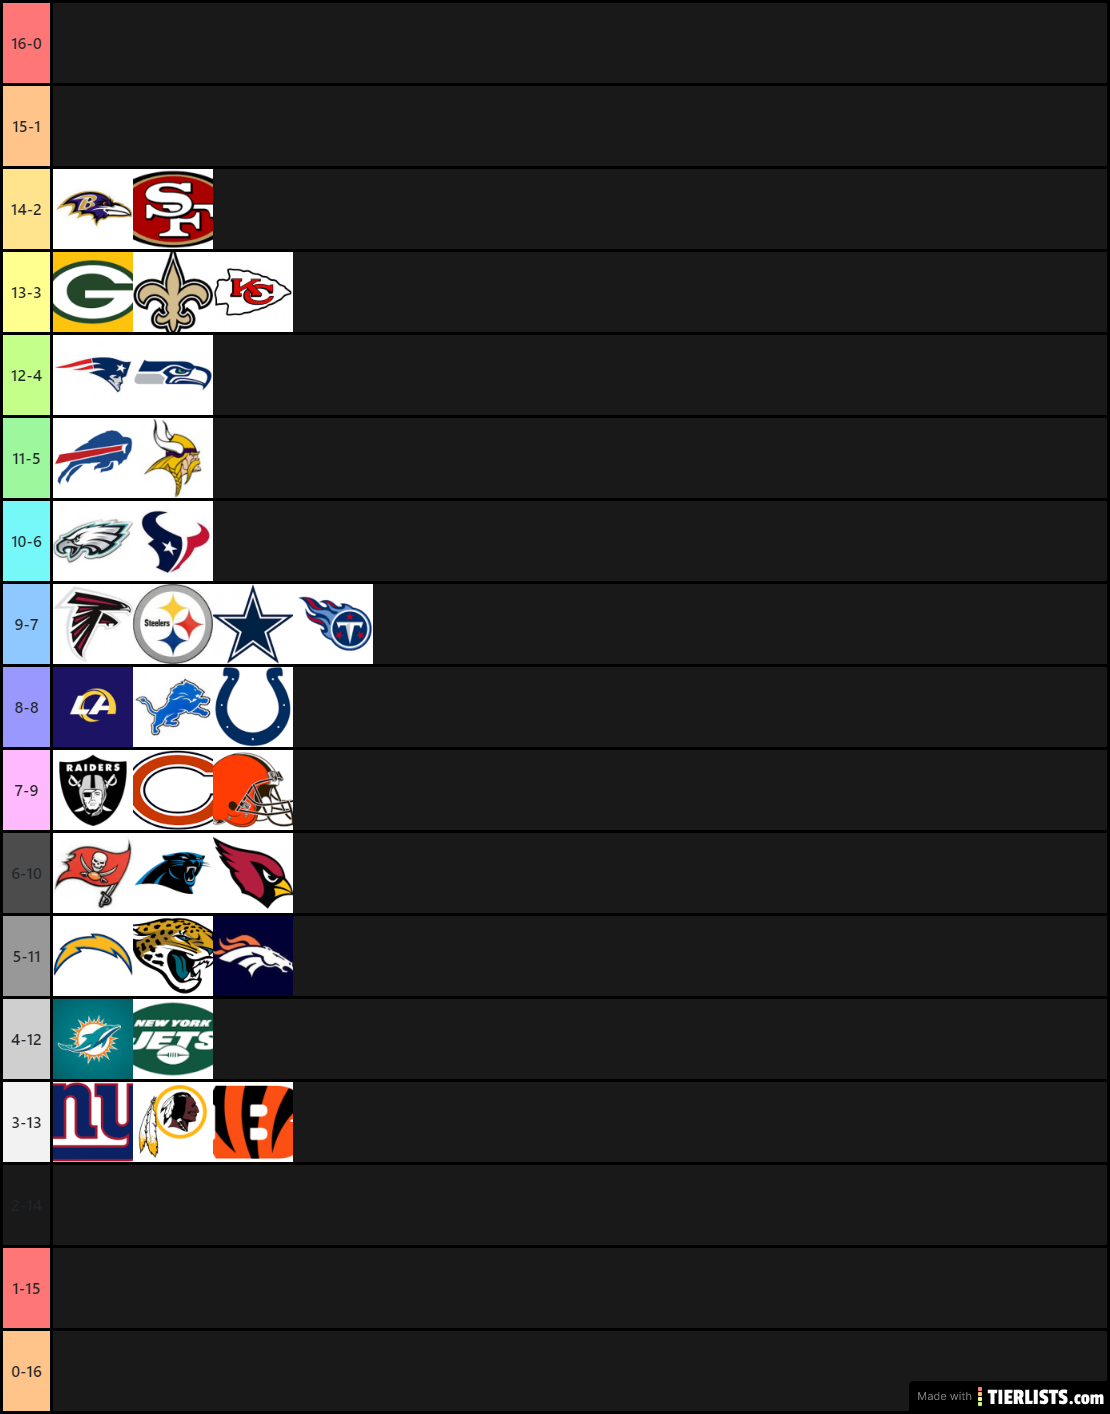 My 2020 NFL Season Prediction